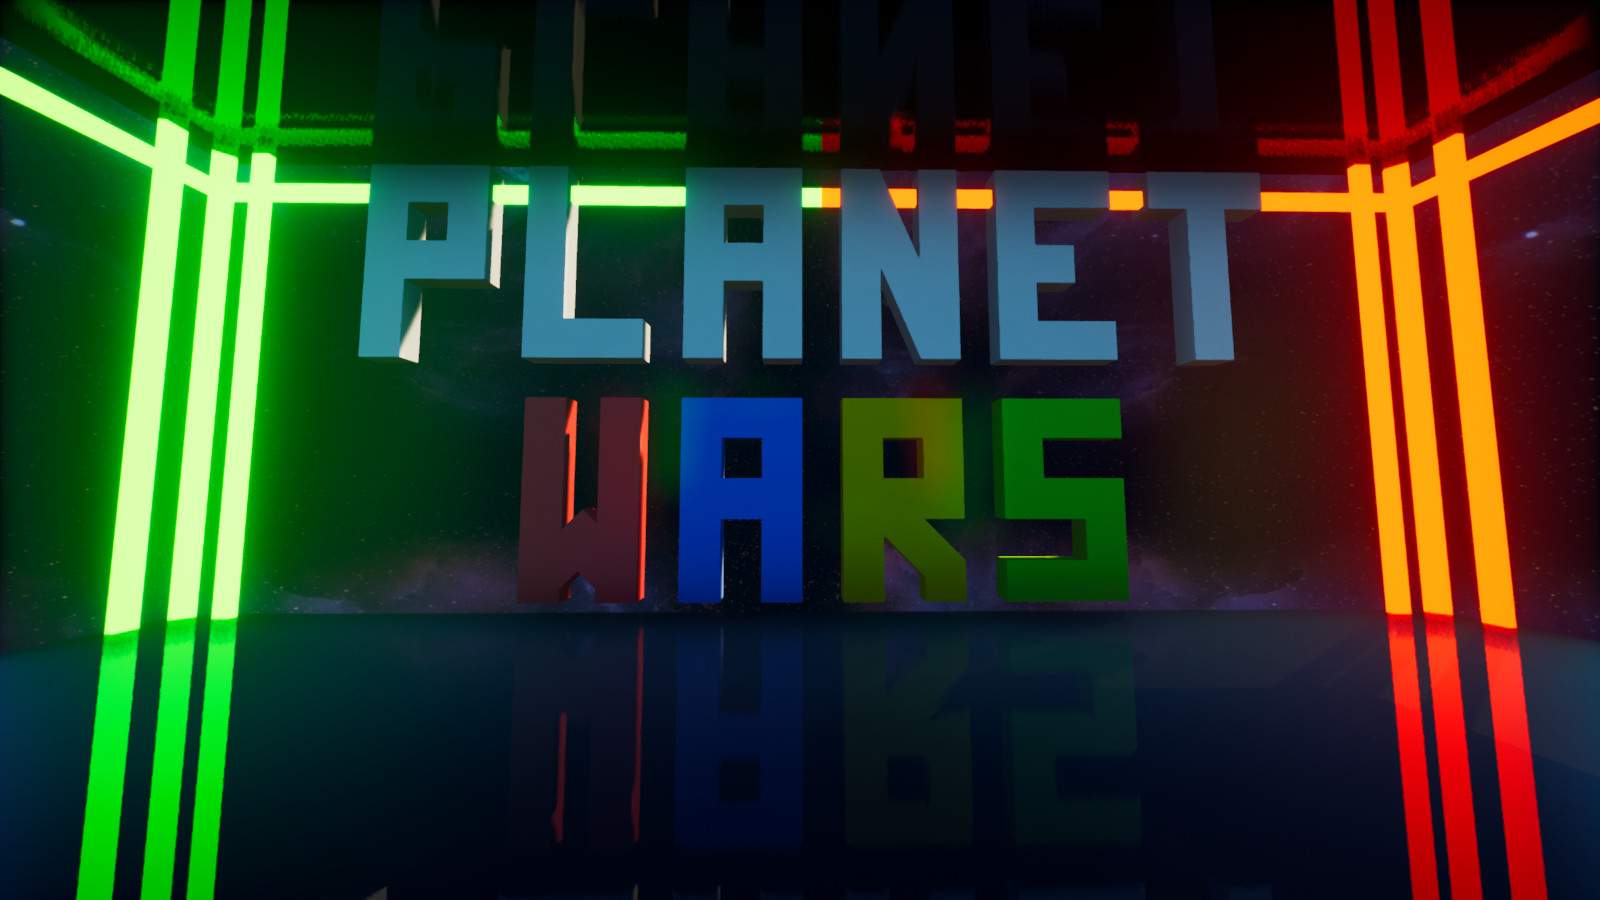 PLANET WARS 1V1V1V1